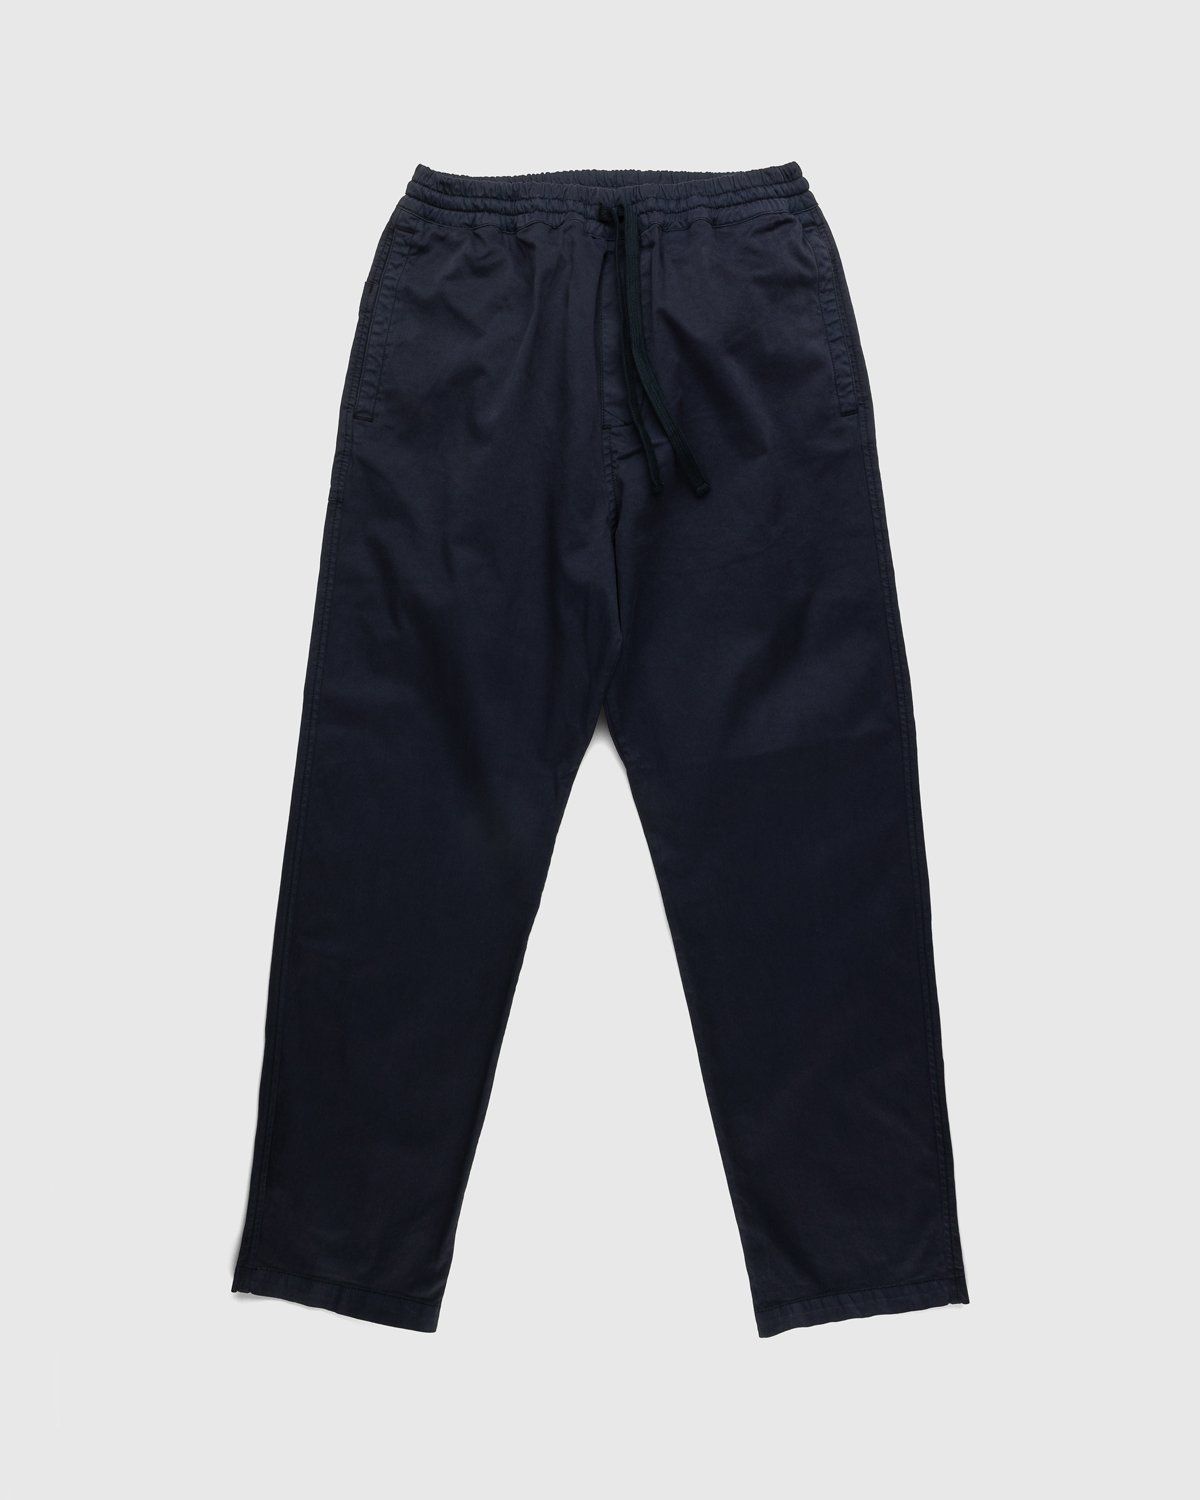 Carhartt WIP – Lawton Pant Navy - Pants - Blue - Image 1